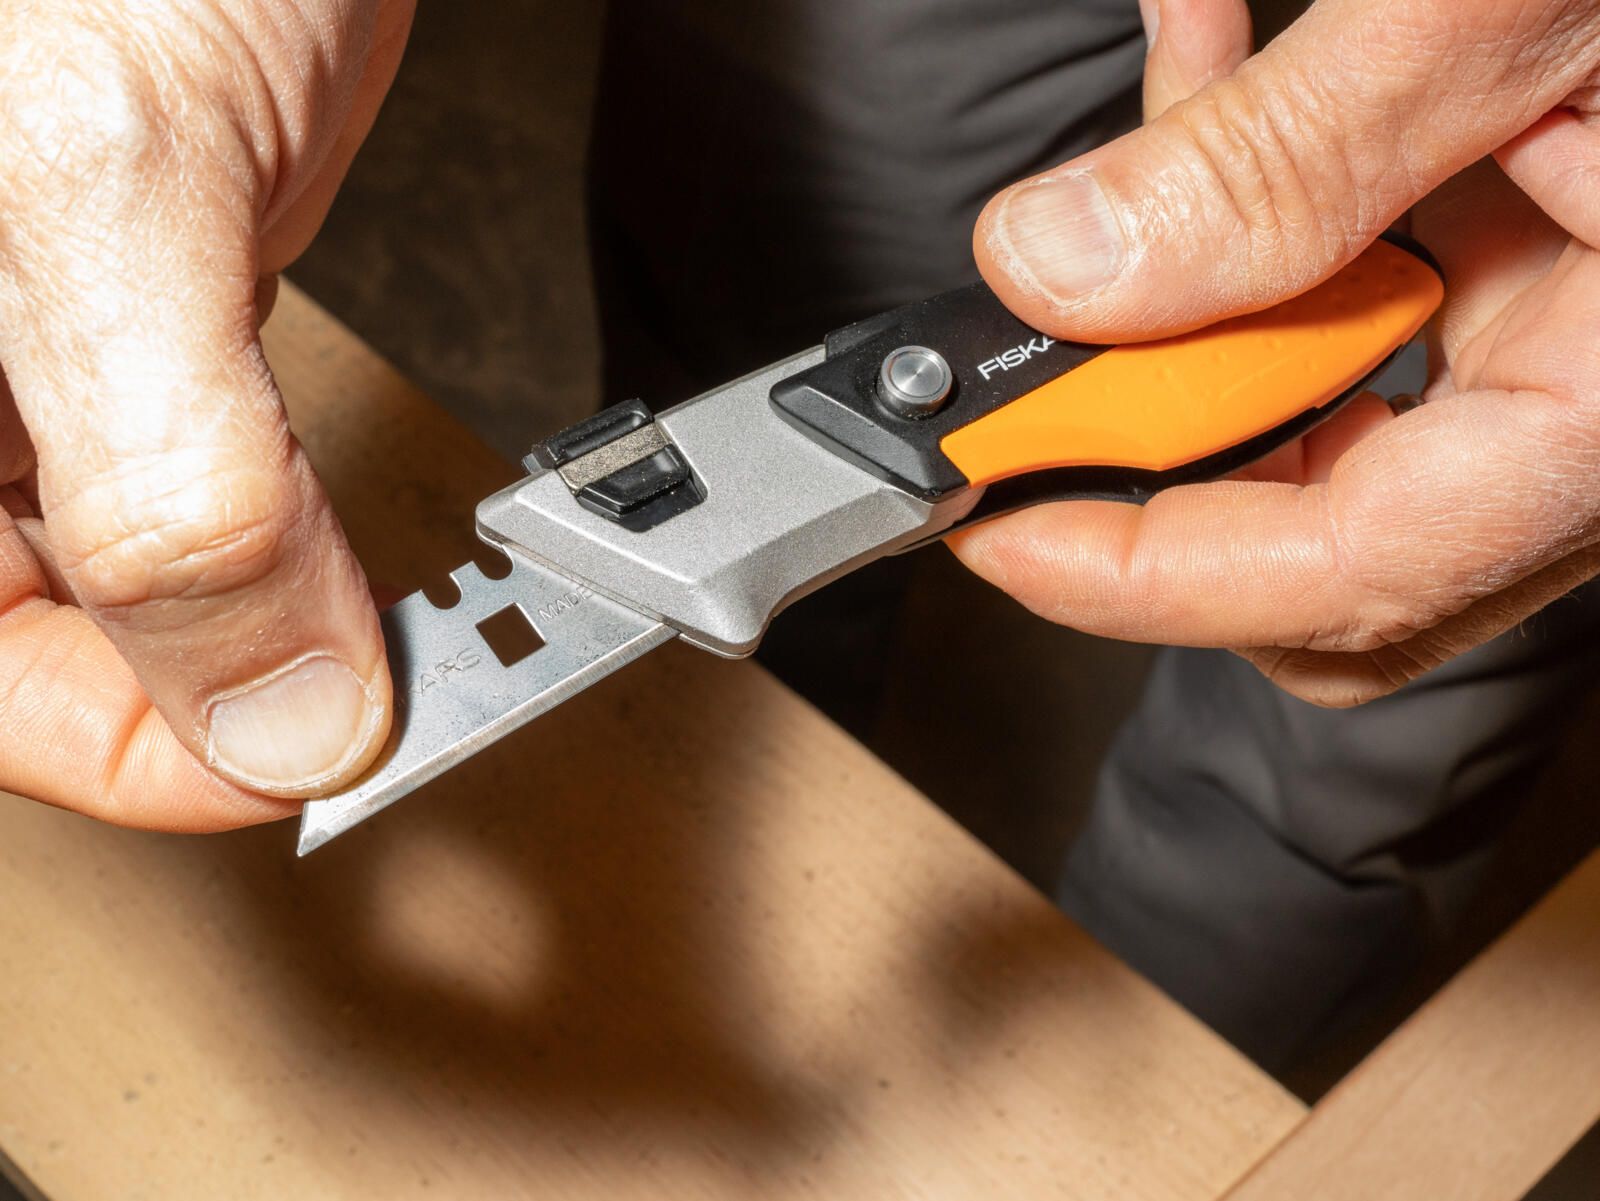 Fiskars Pro Folding Blade Utility Knife, Black/Orange